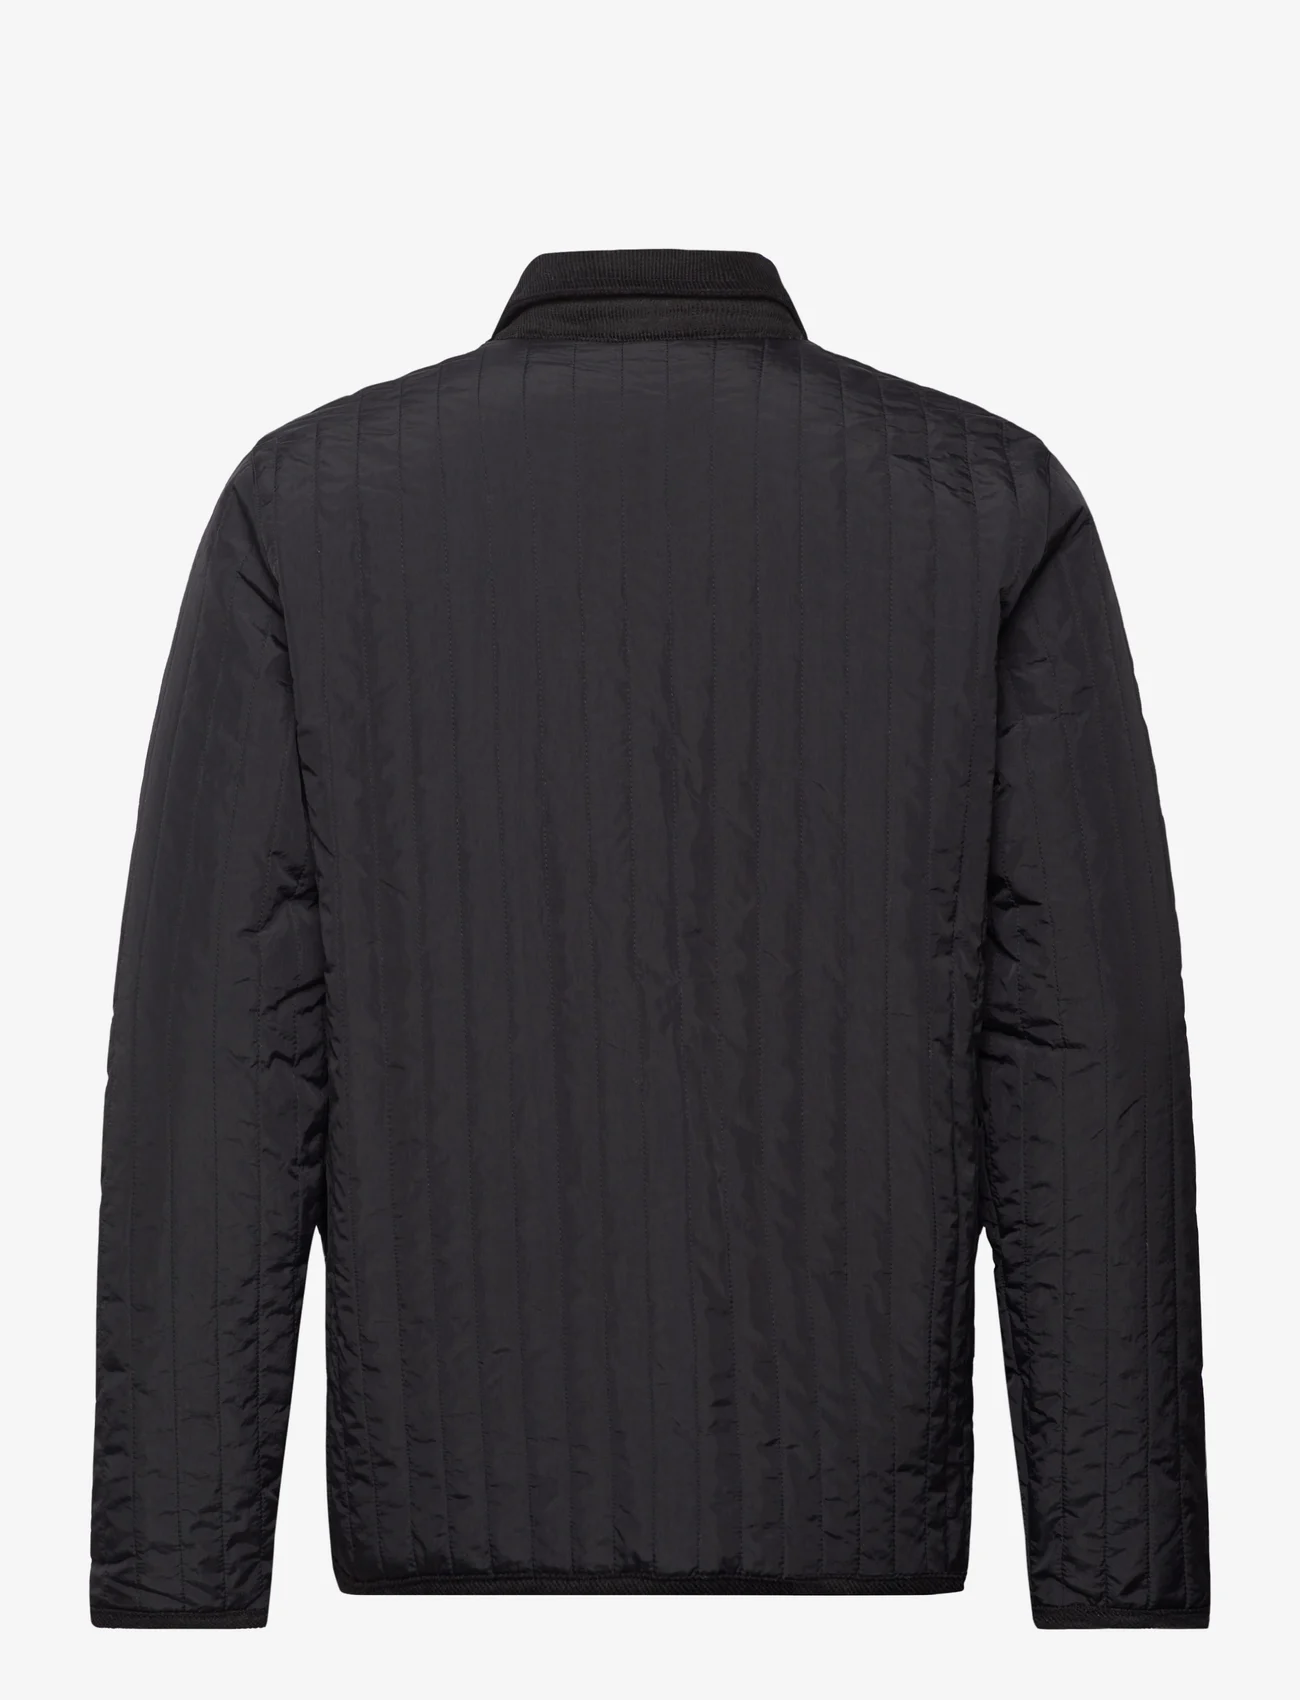 Resteröds - Quilted Jacket - pavasara jakas - svart - 1